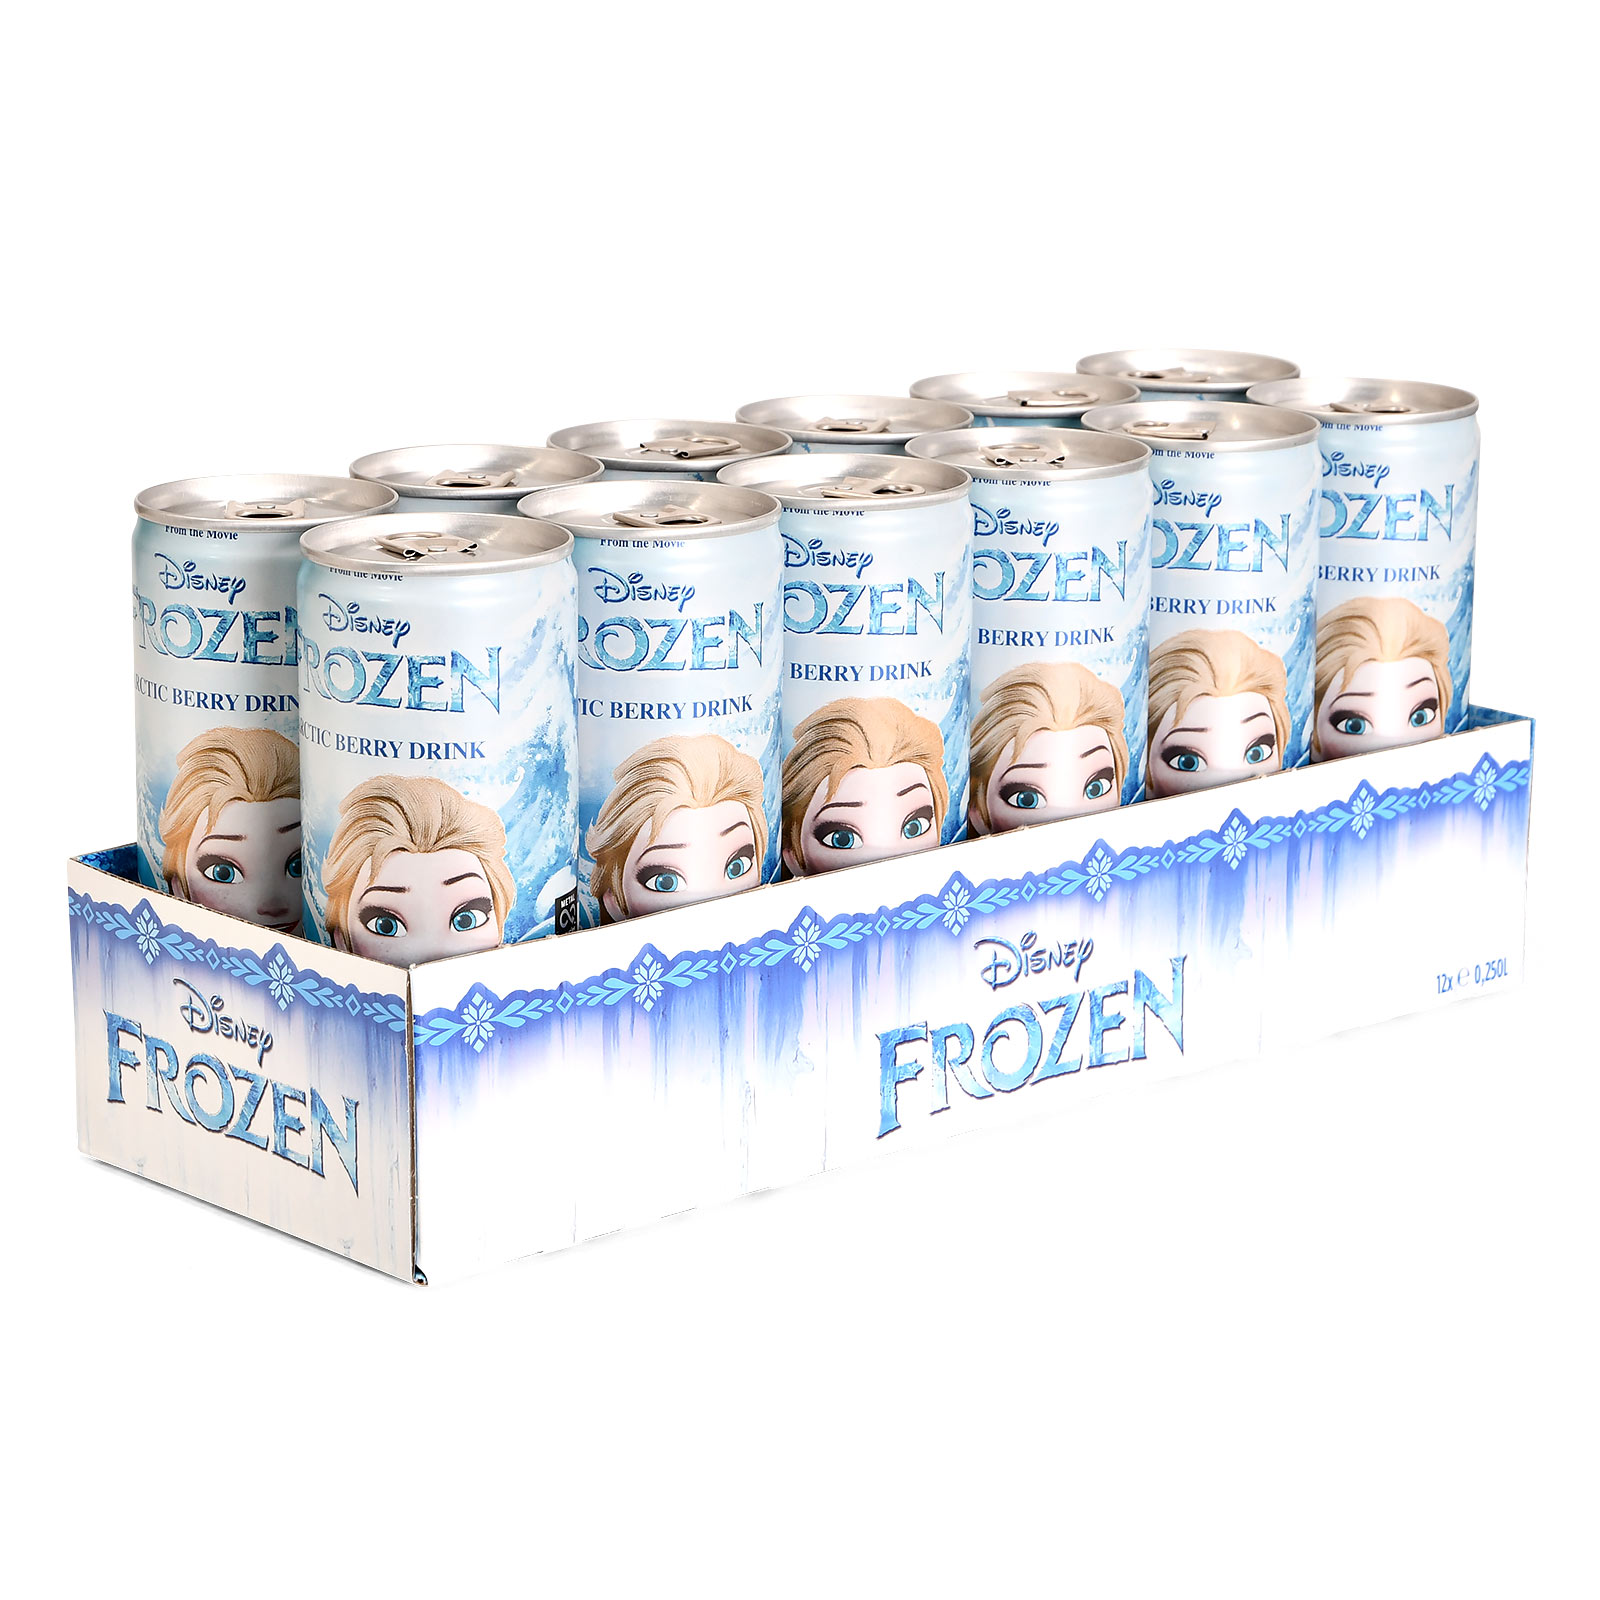 Frozen - Elsa Arctic Berry Fruchtdrink 12er Pack